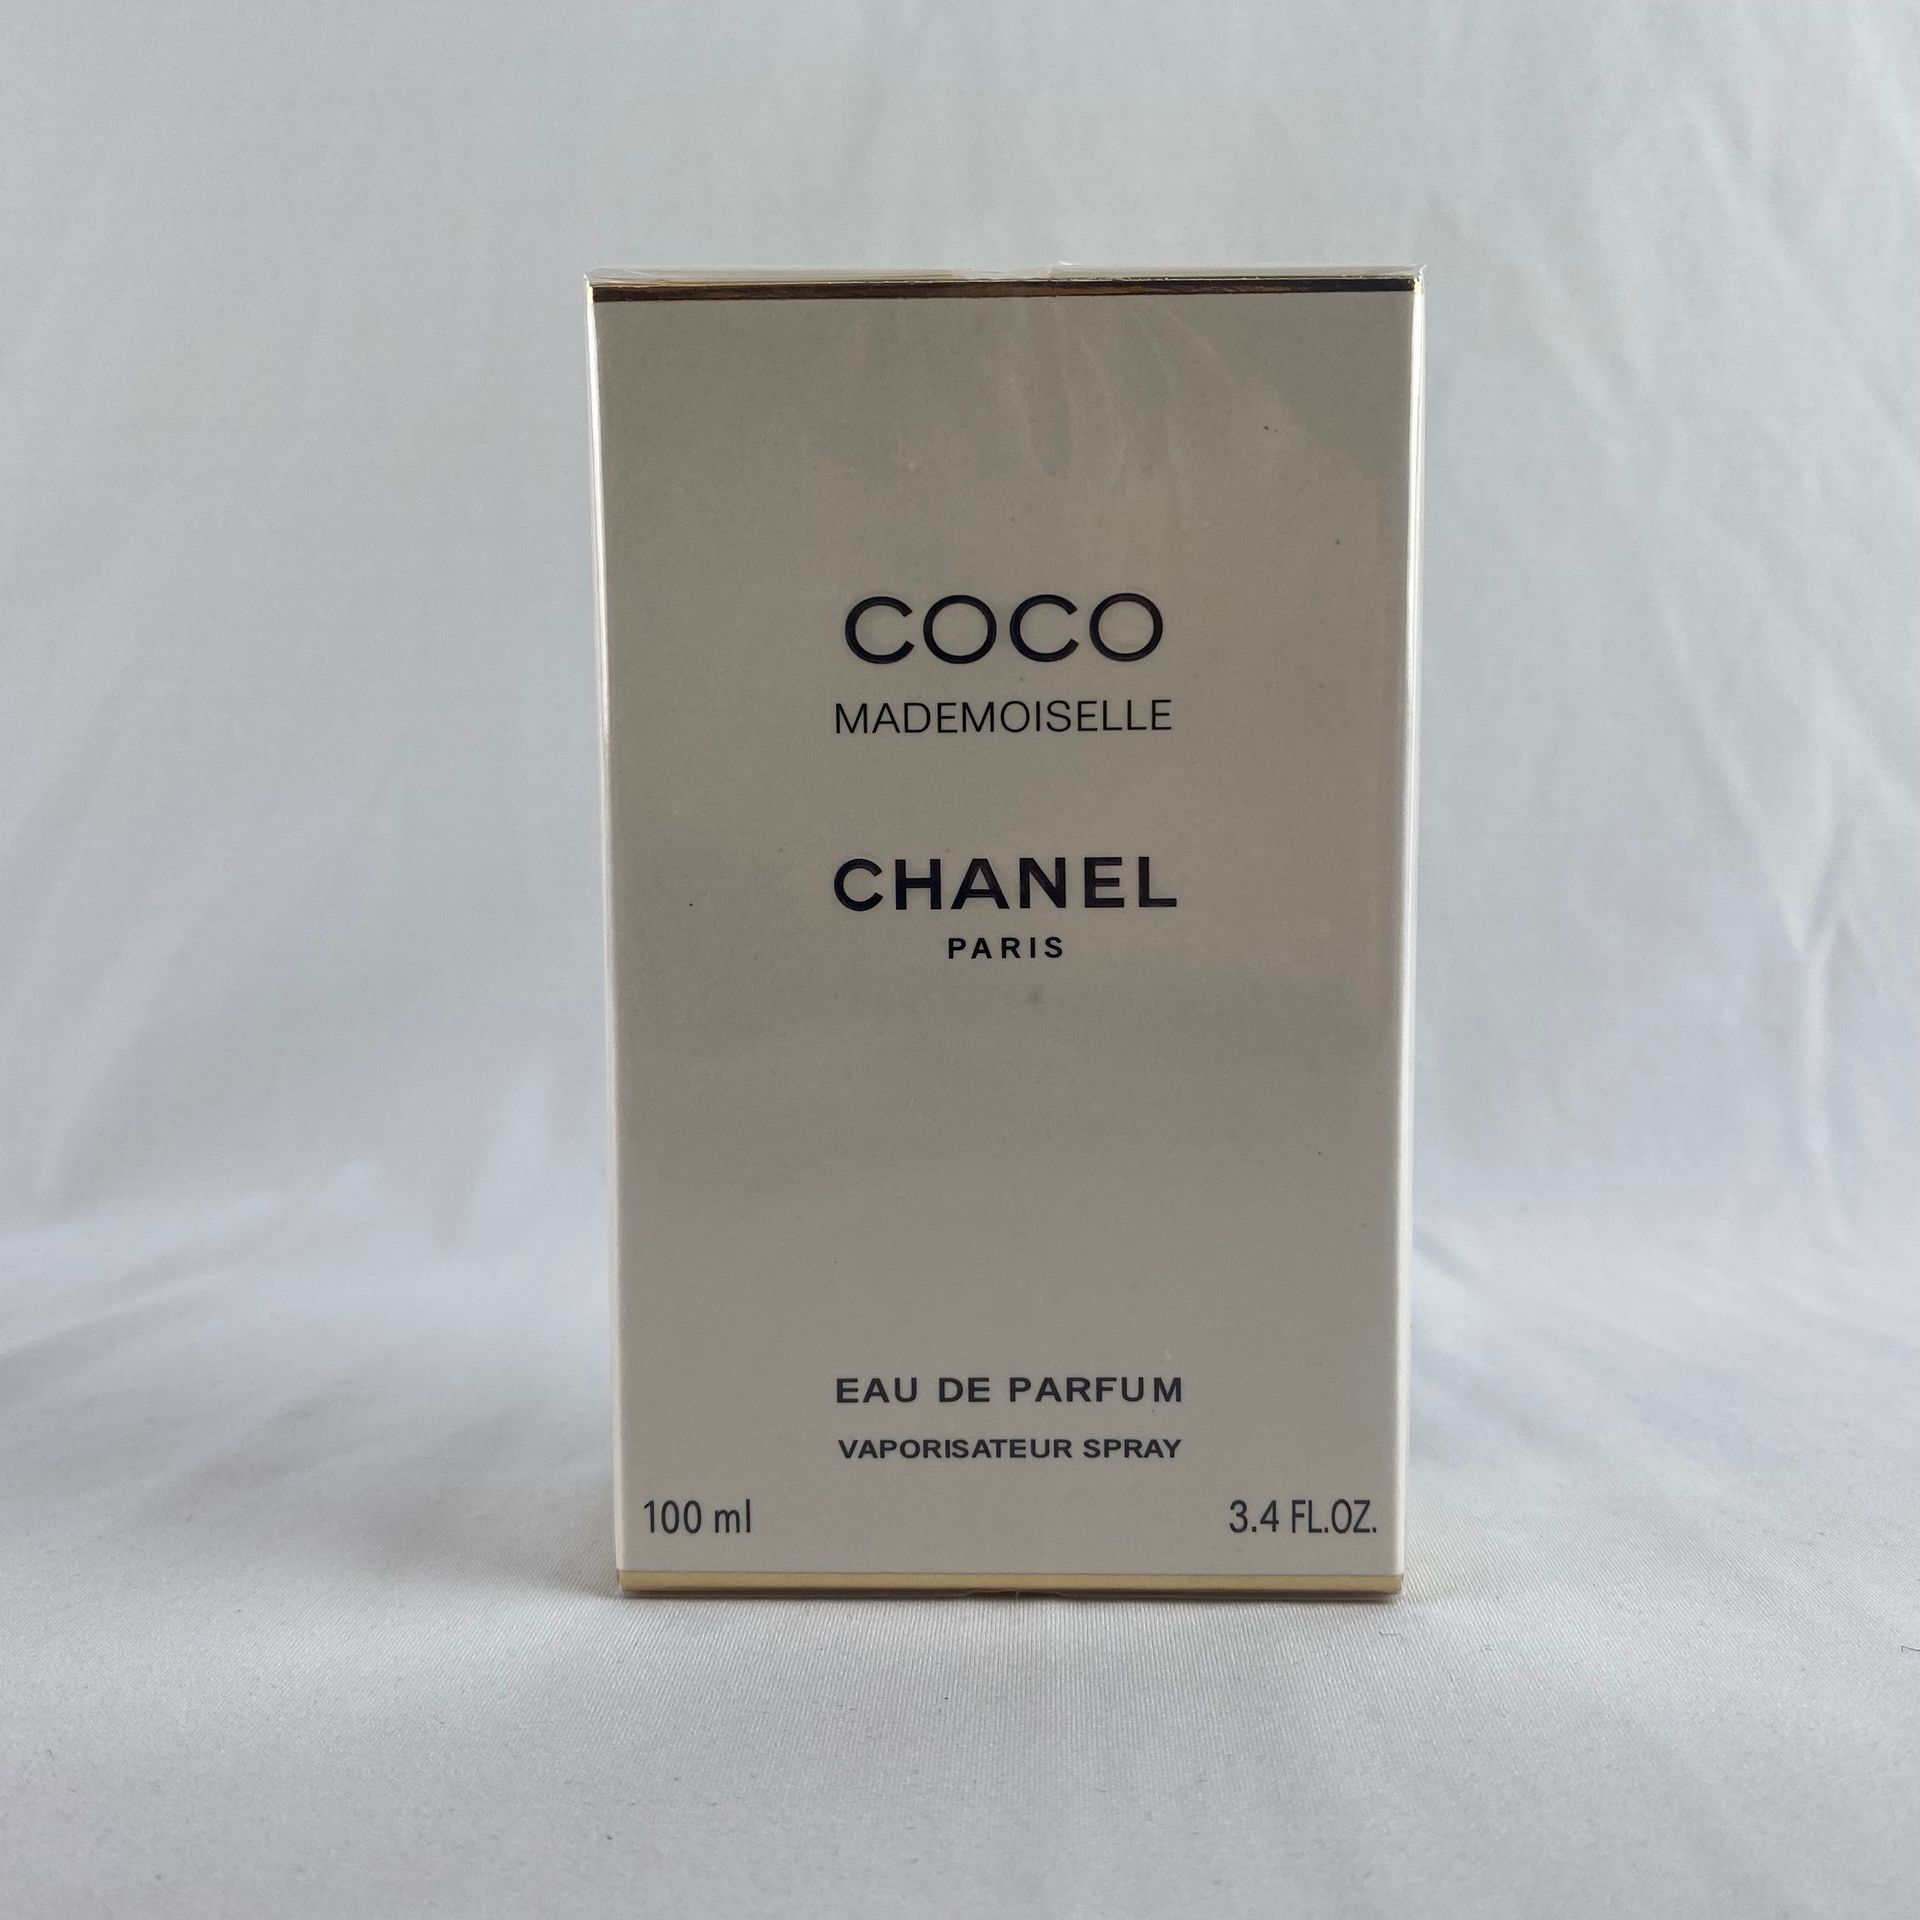 Coco mademoiselle CHANEL eau de parfum 100ml new in blis…